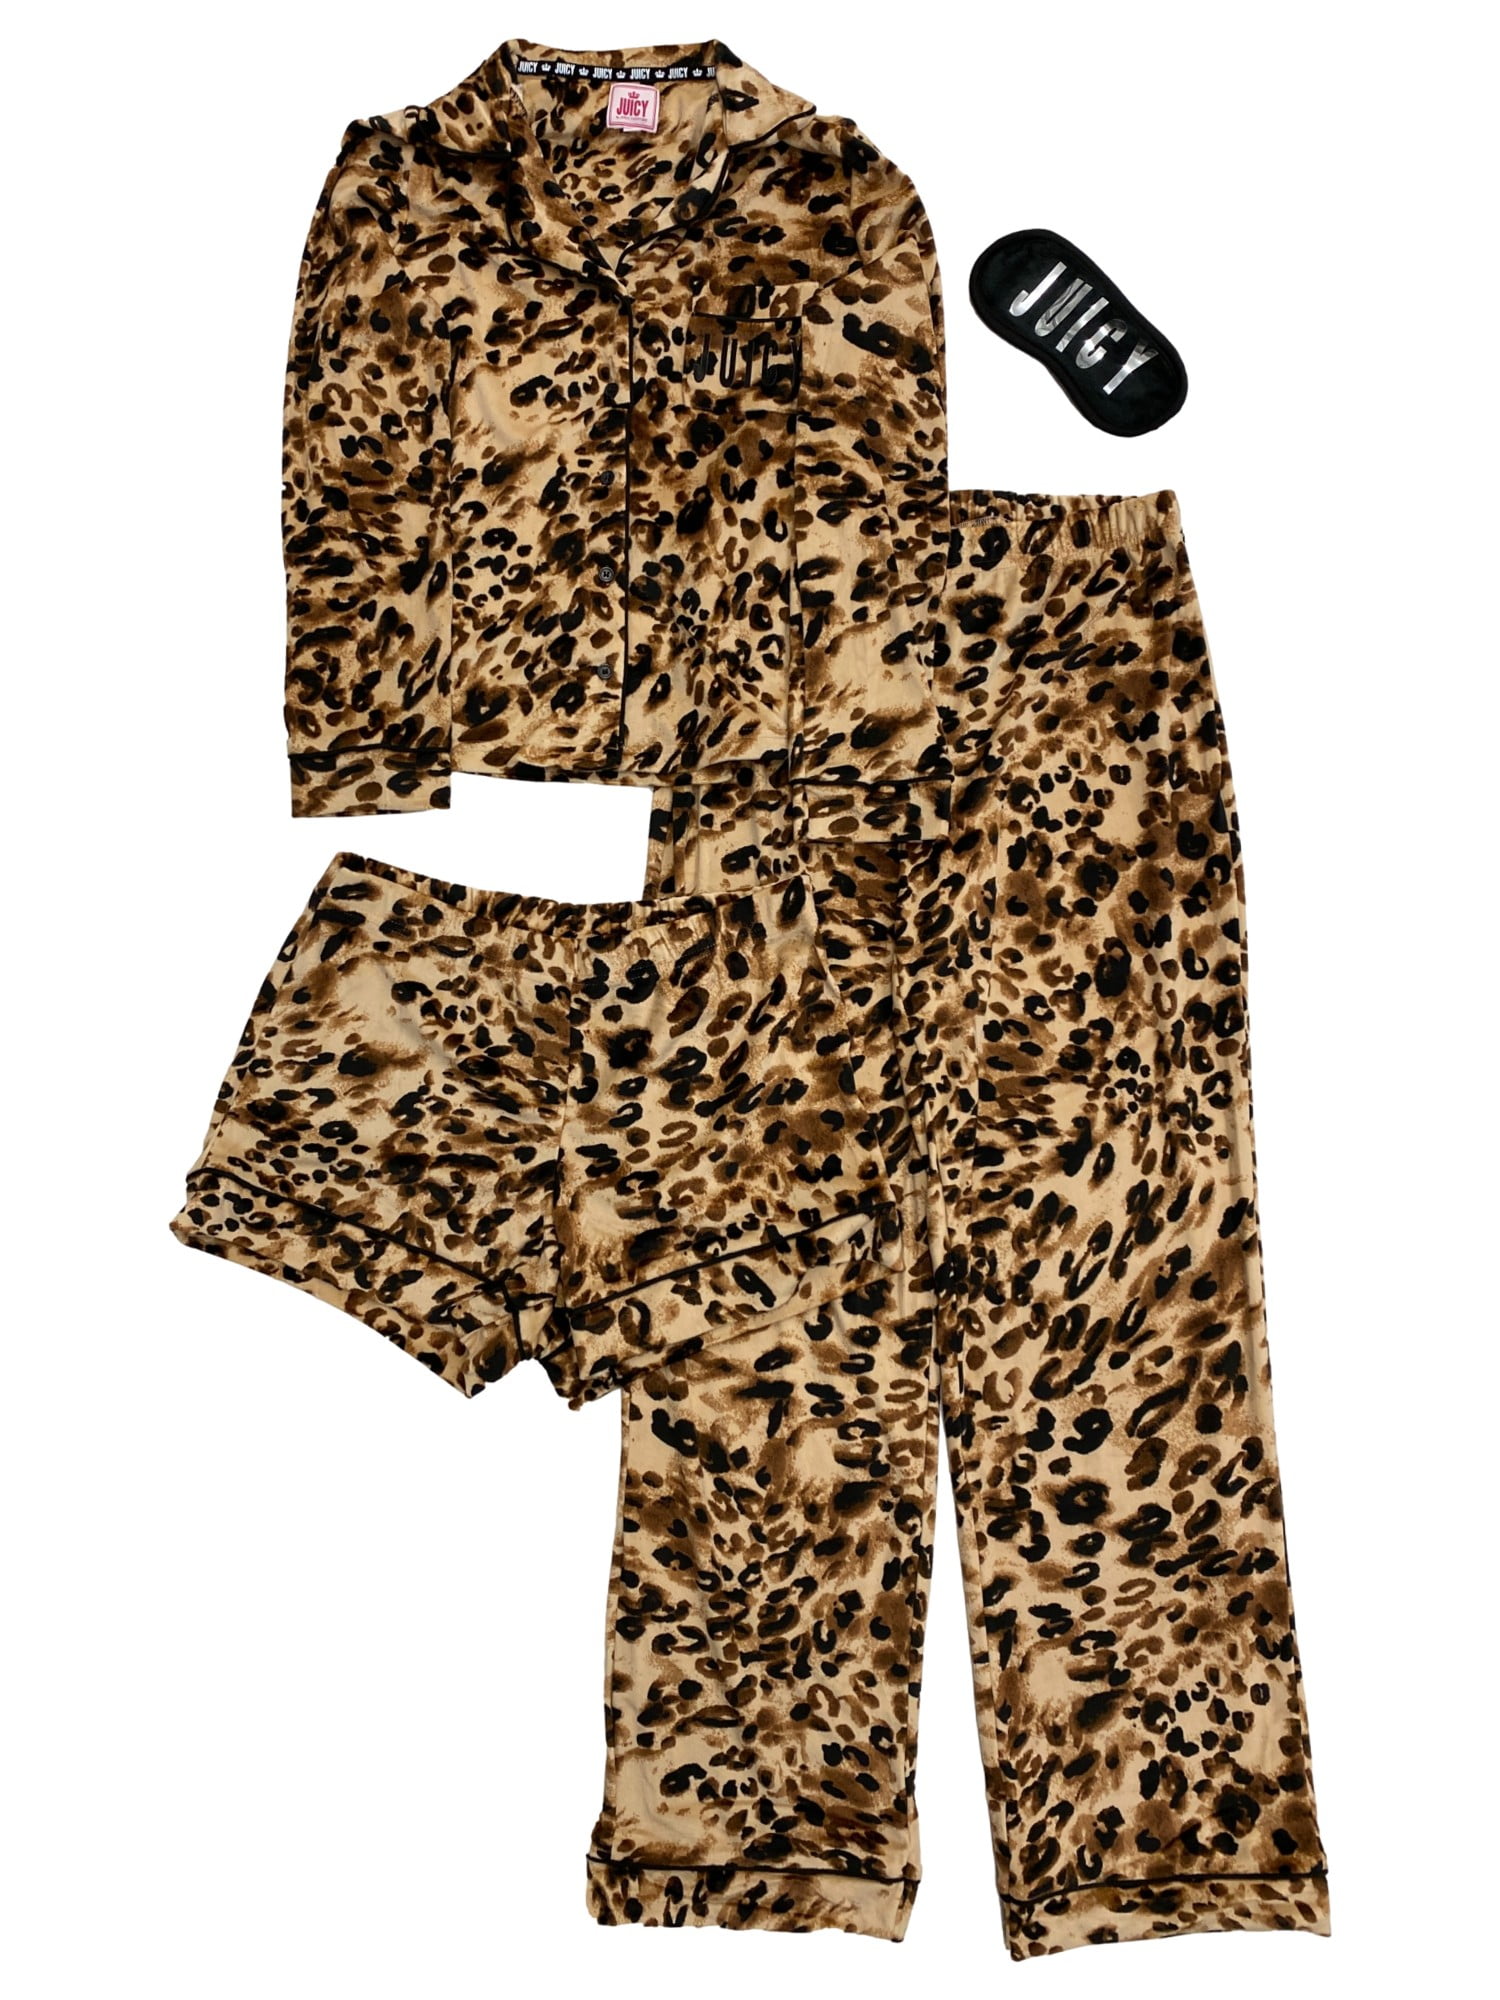 Juicy Couture Womens Plush Leopard Pajamas Shorts Pants Top Sleep Set  Medium 